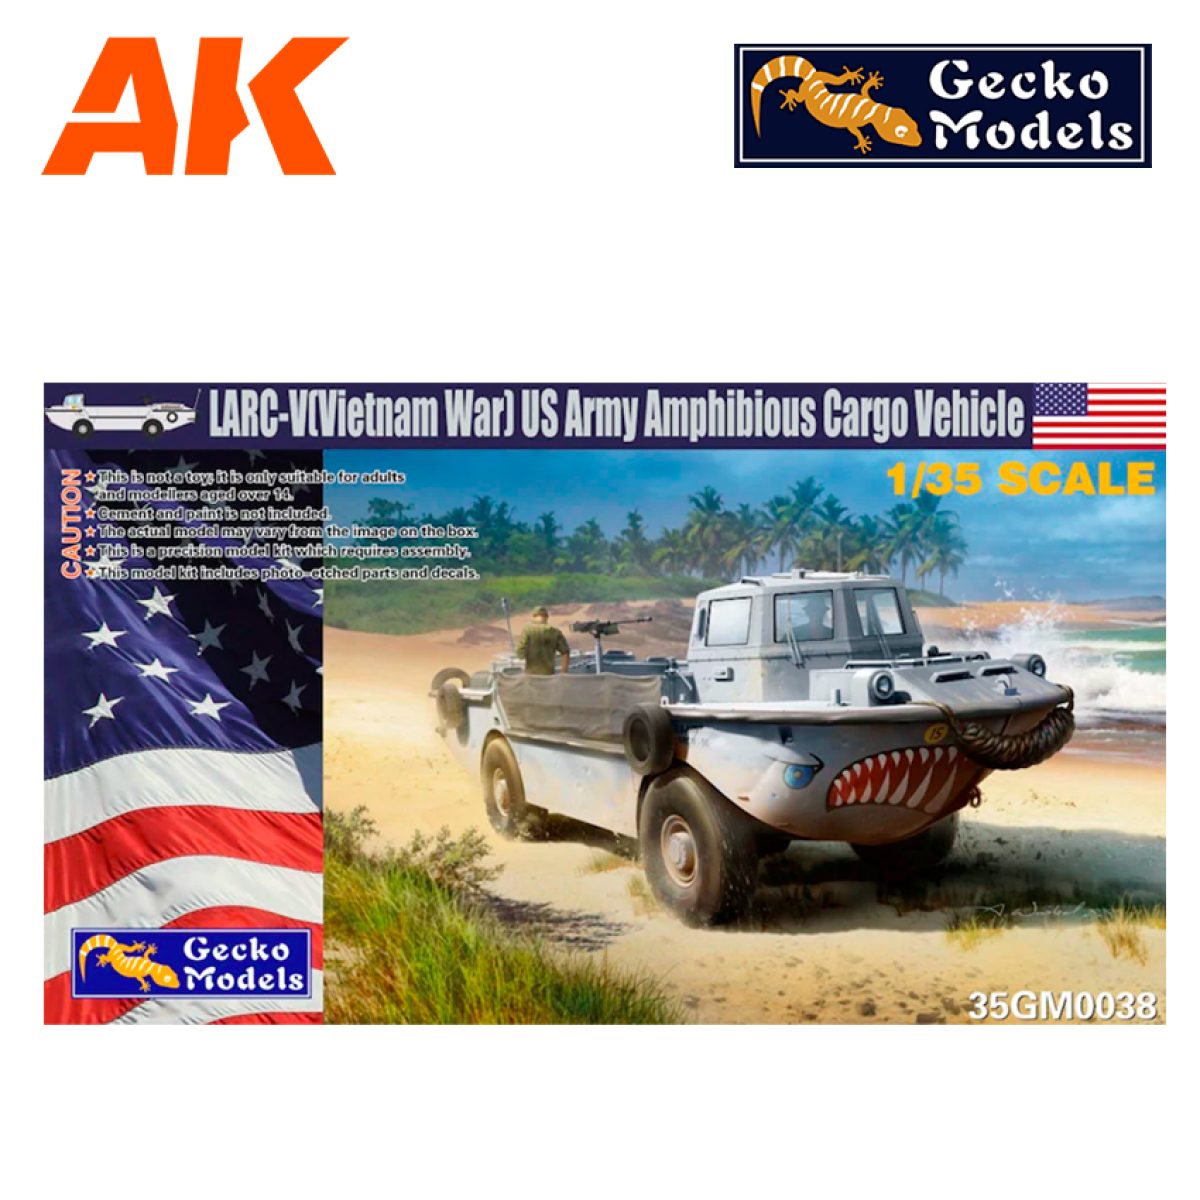 Vietnam War US Army Amphibious Cargo Vehicle Gecko Models 35GM0038 1/35 LARC-V 